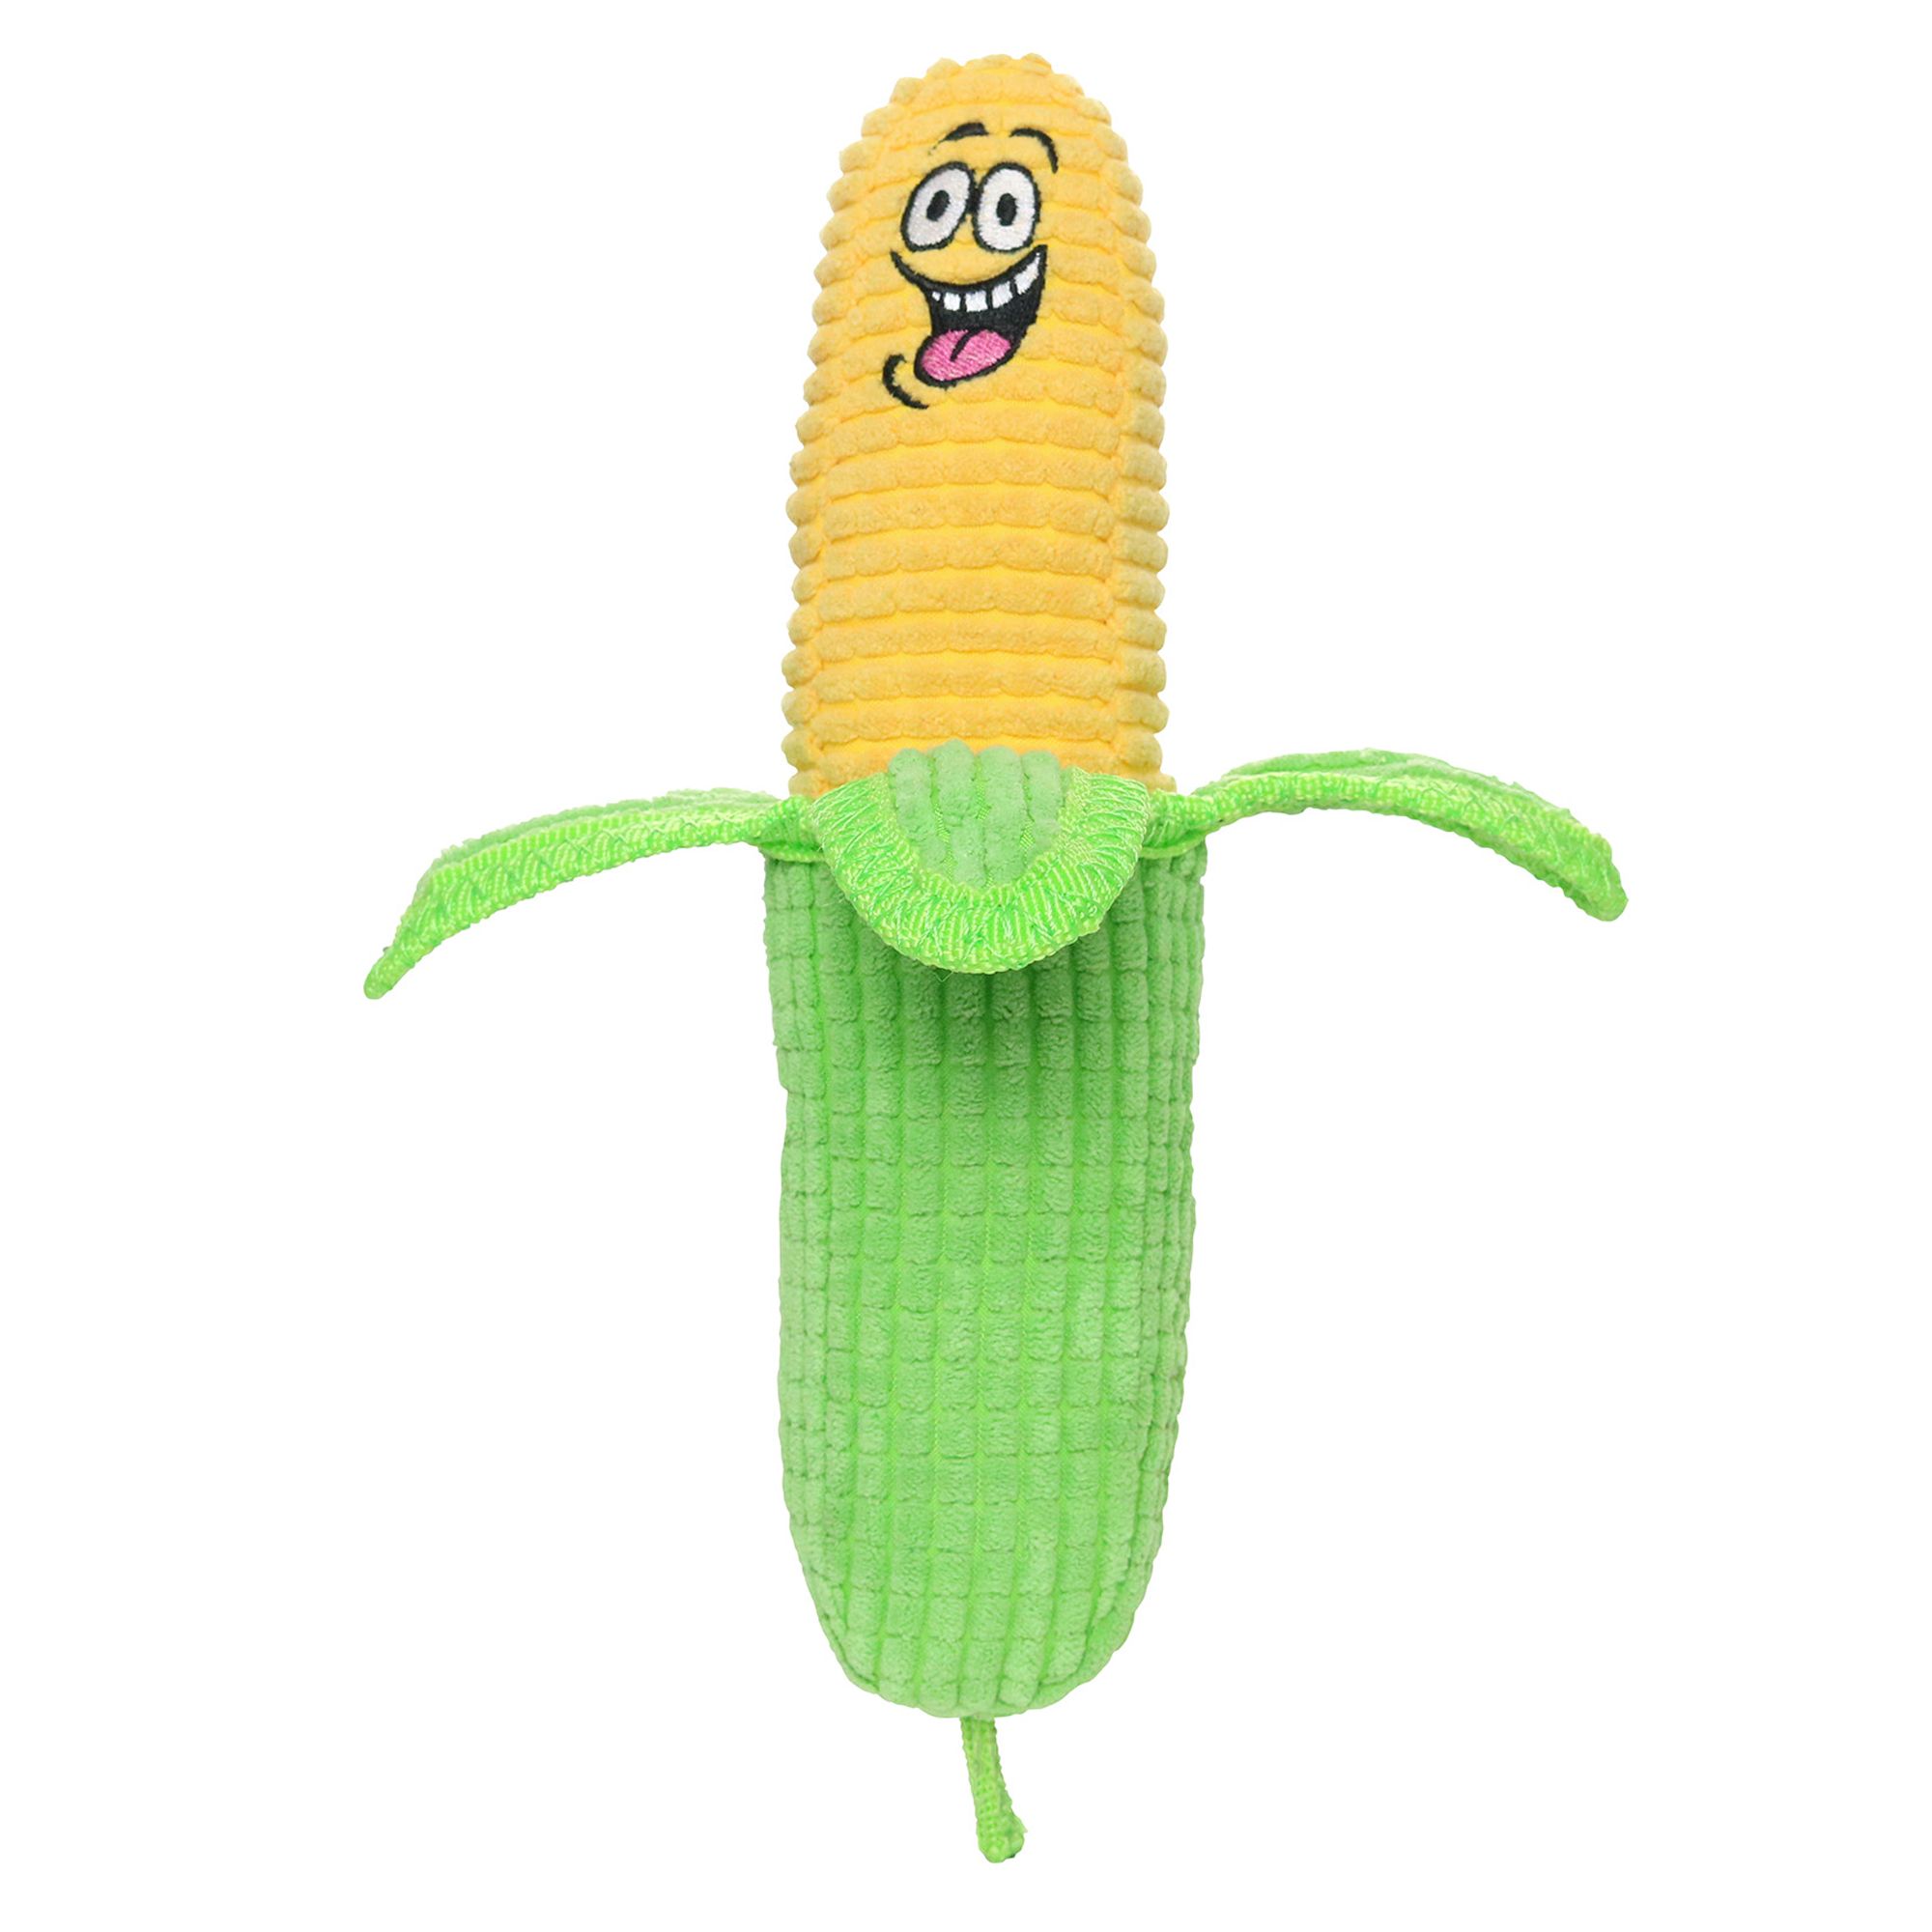 corn plush toy